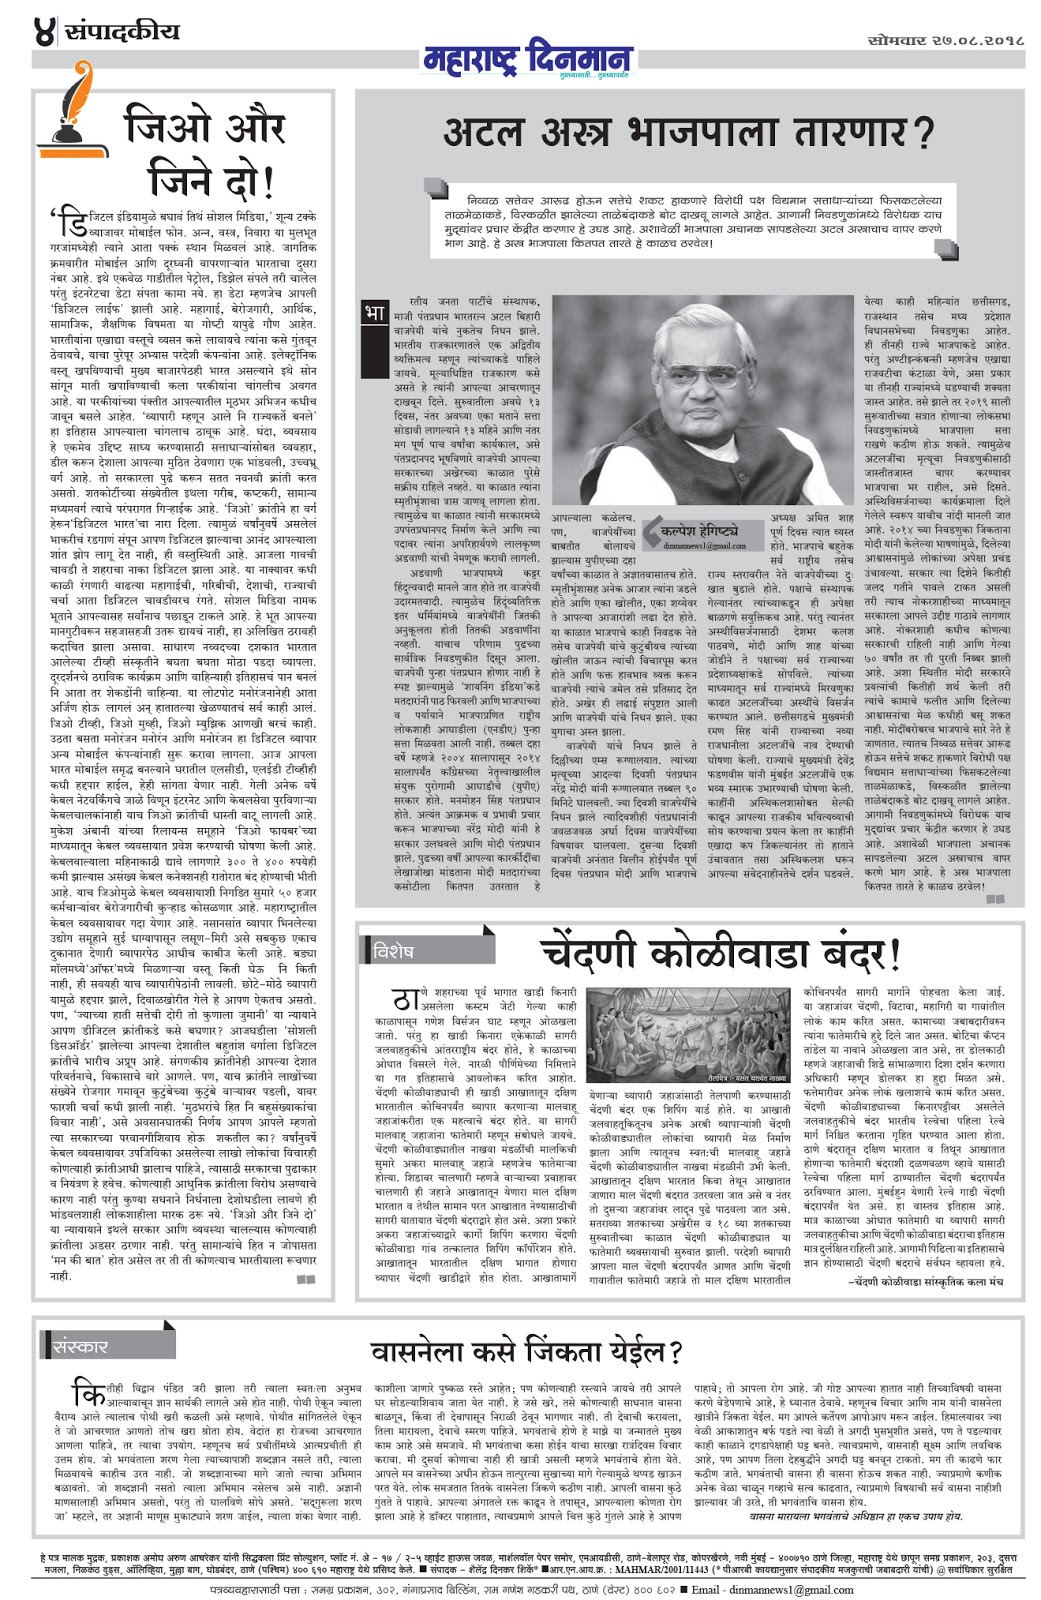 essay on newspaper in marathi